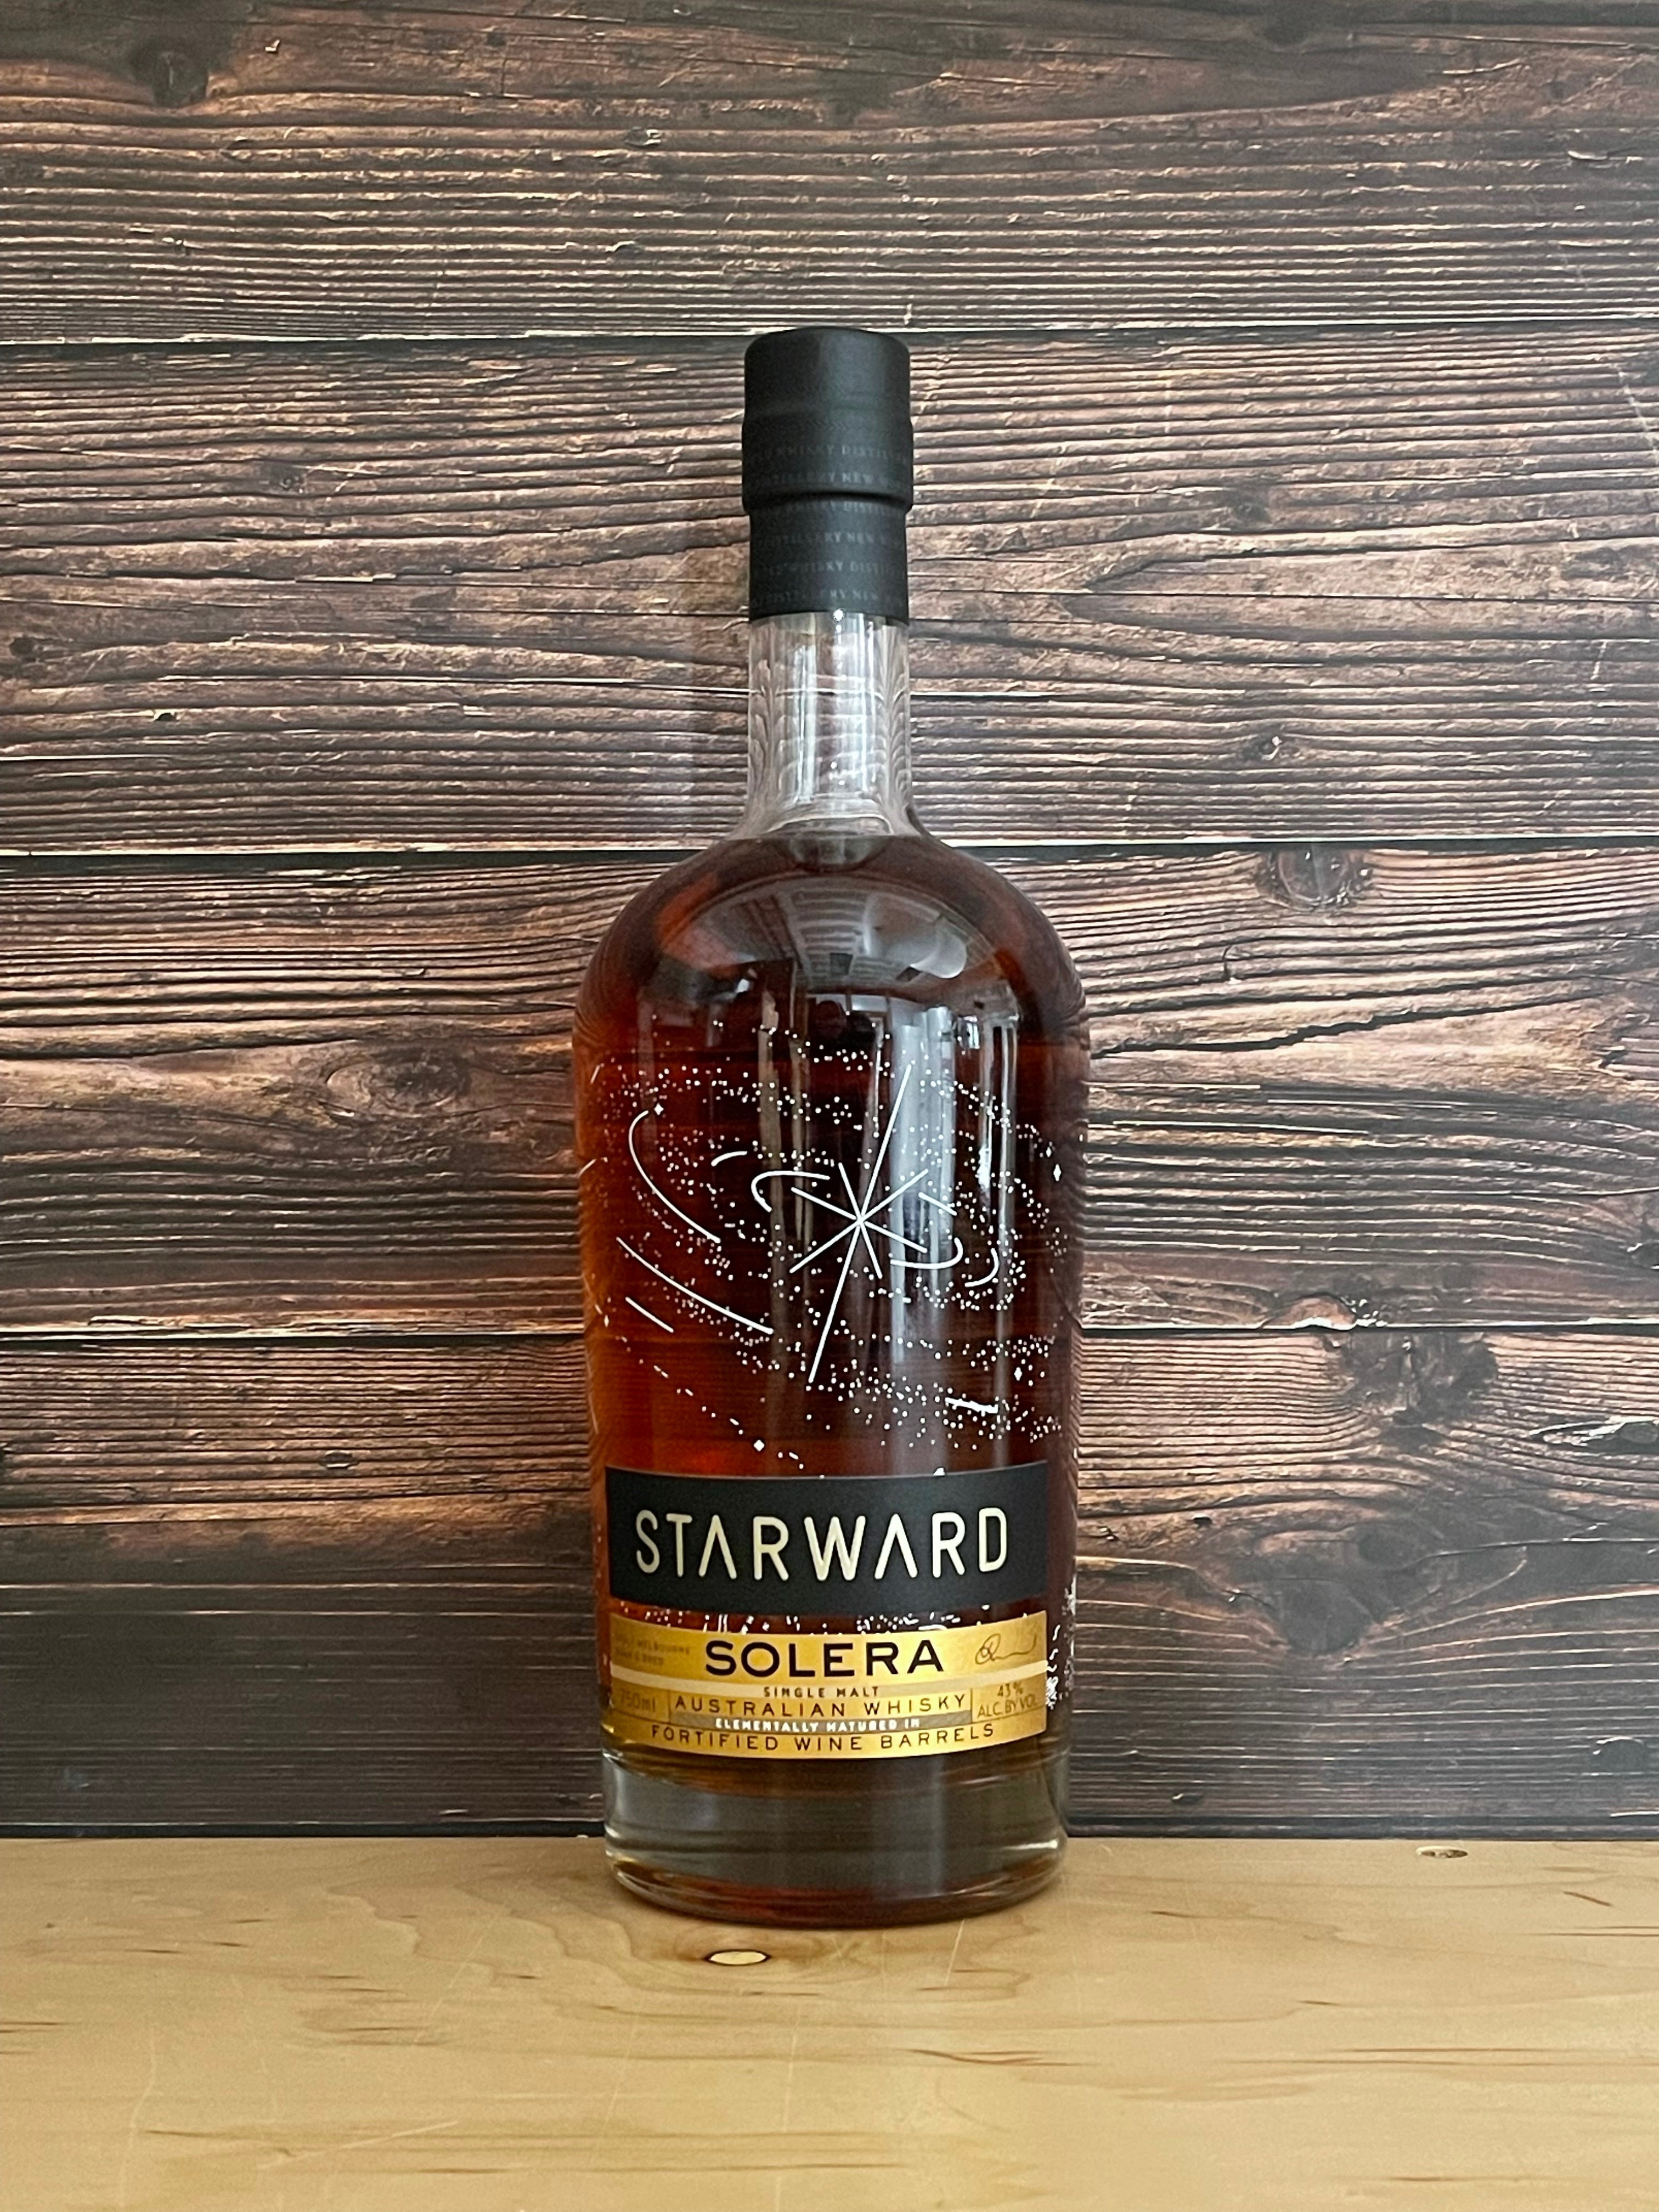 Starward Solera Single Malt Australian Whisky